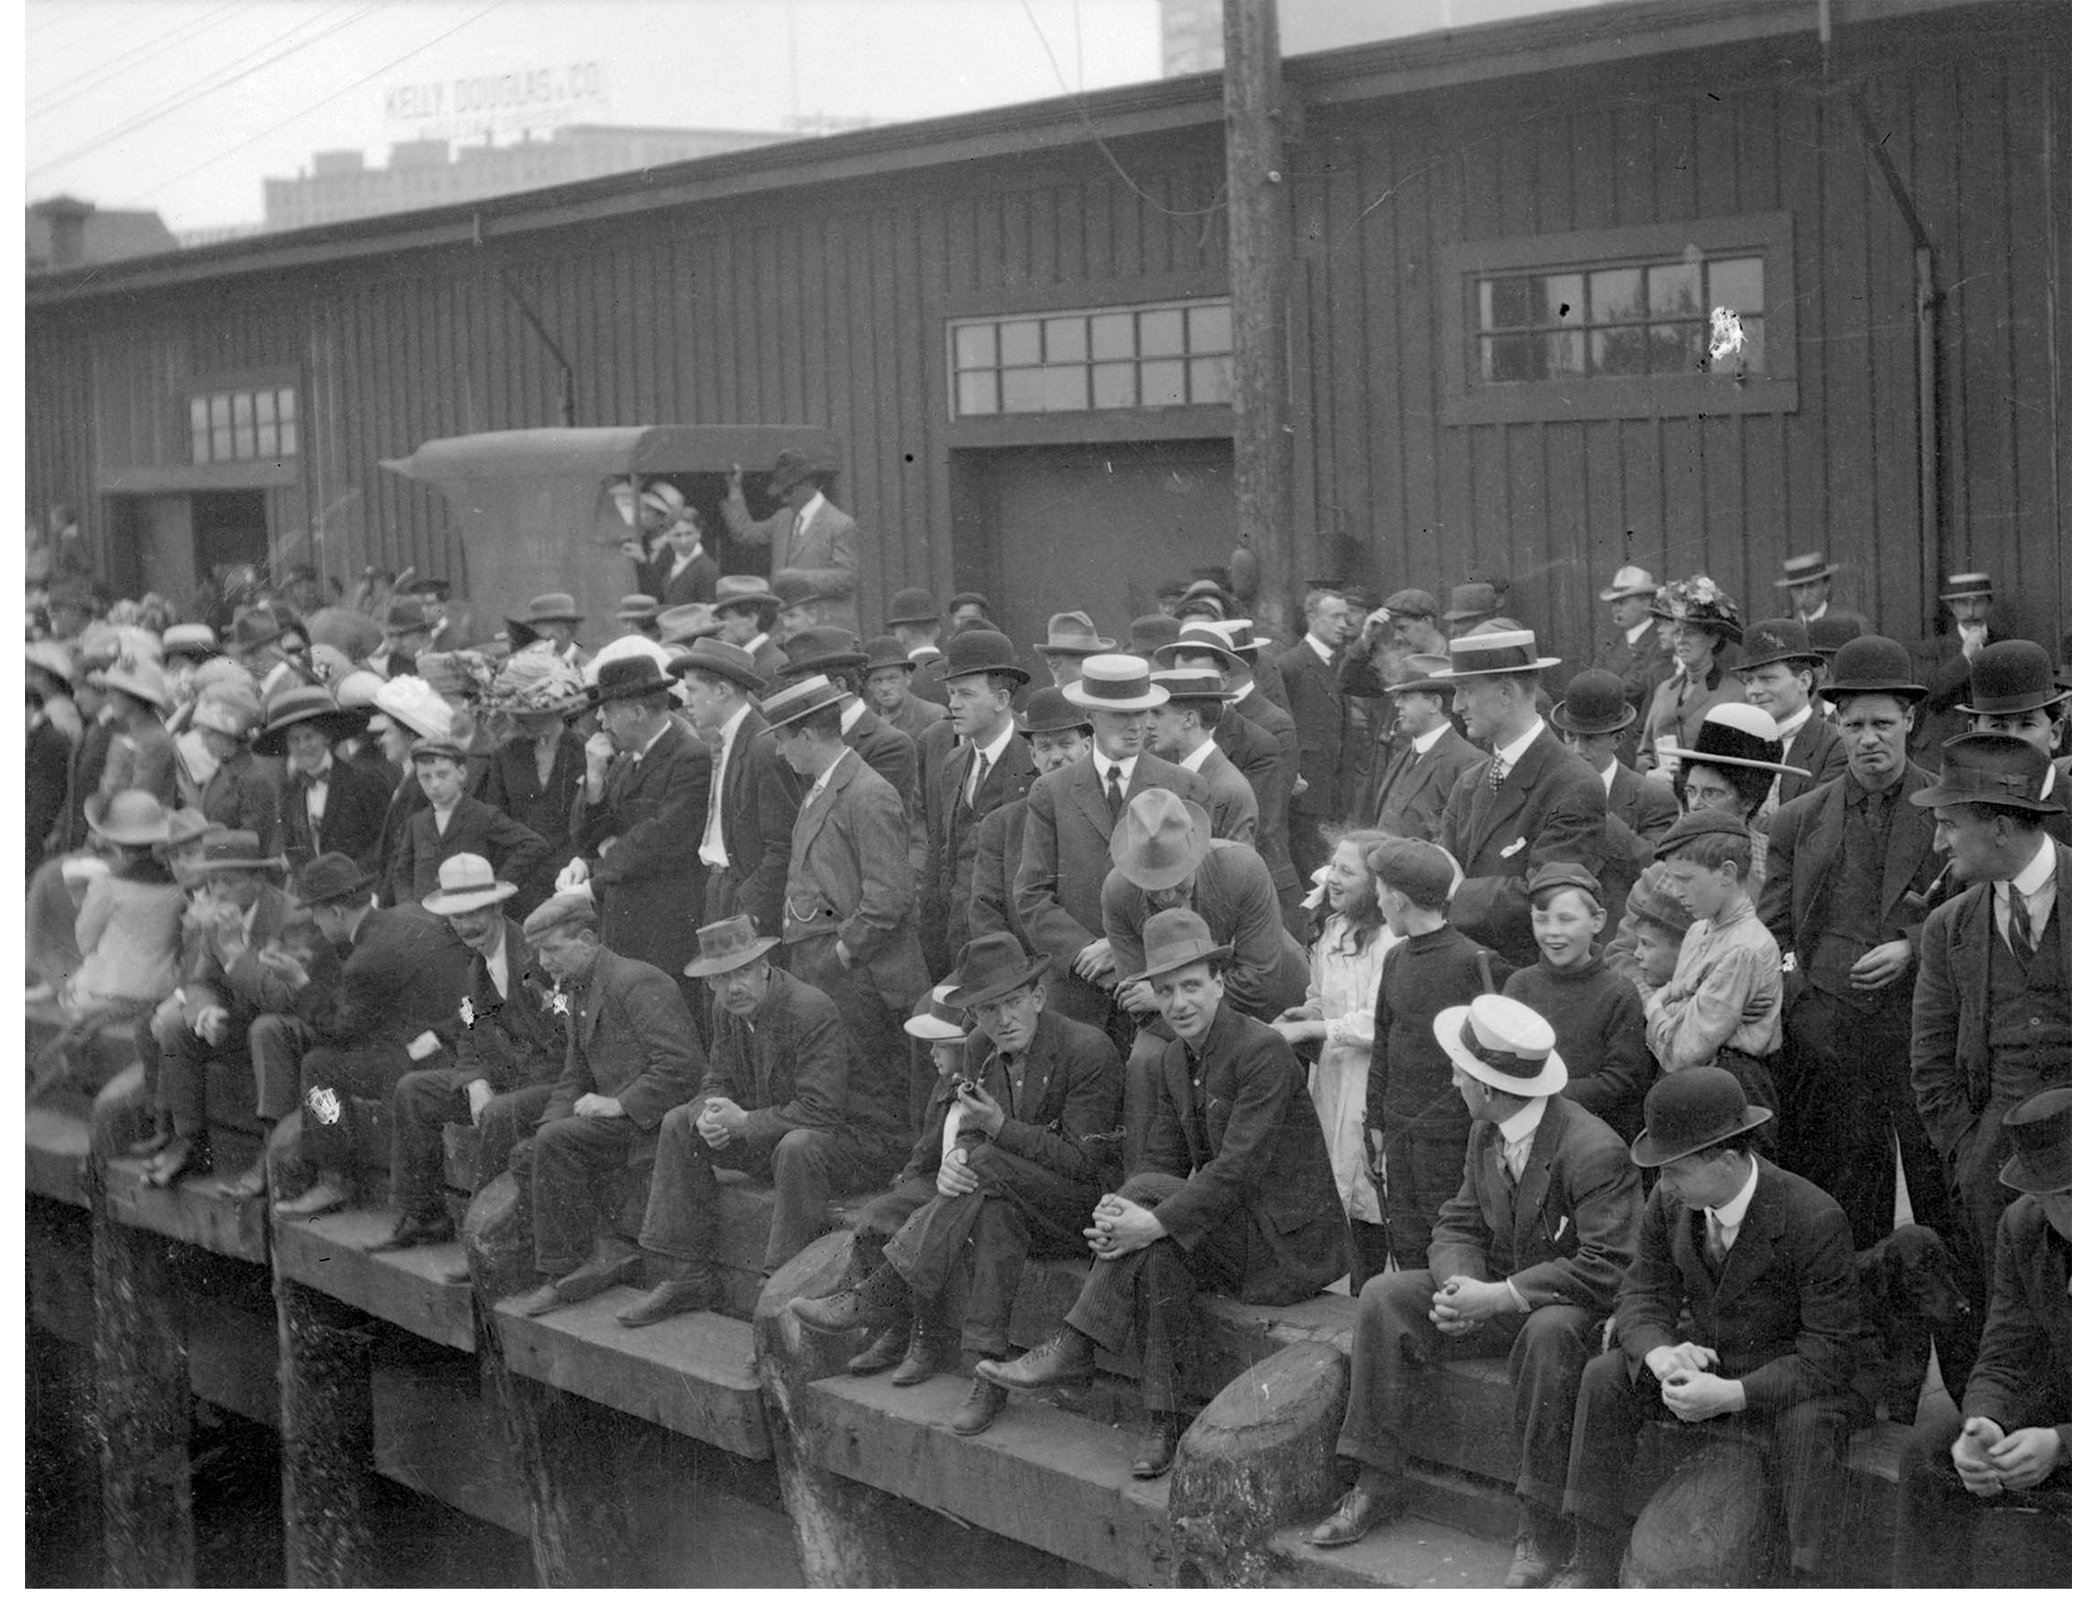 Onlookers on 
wharf watching the Komagata Maru, 1914